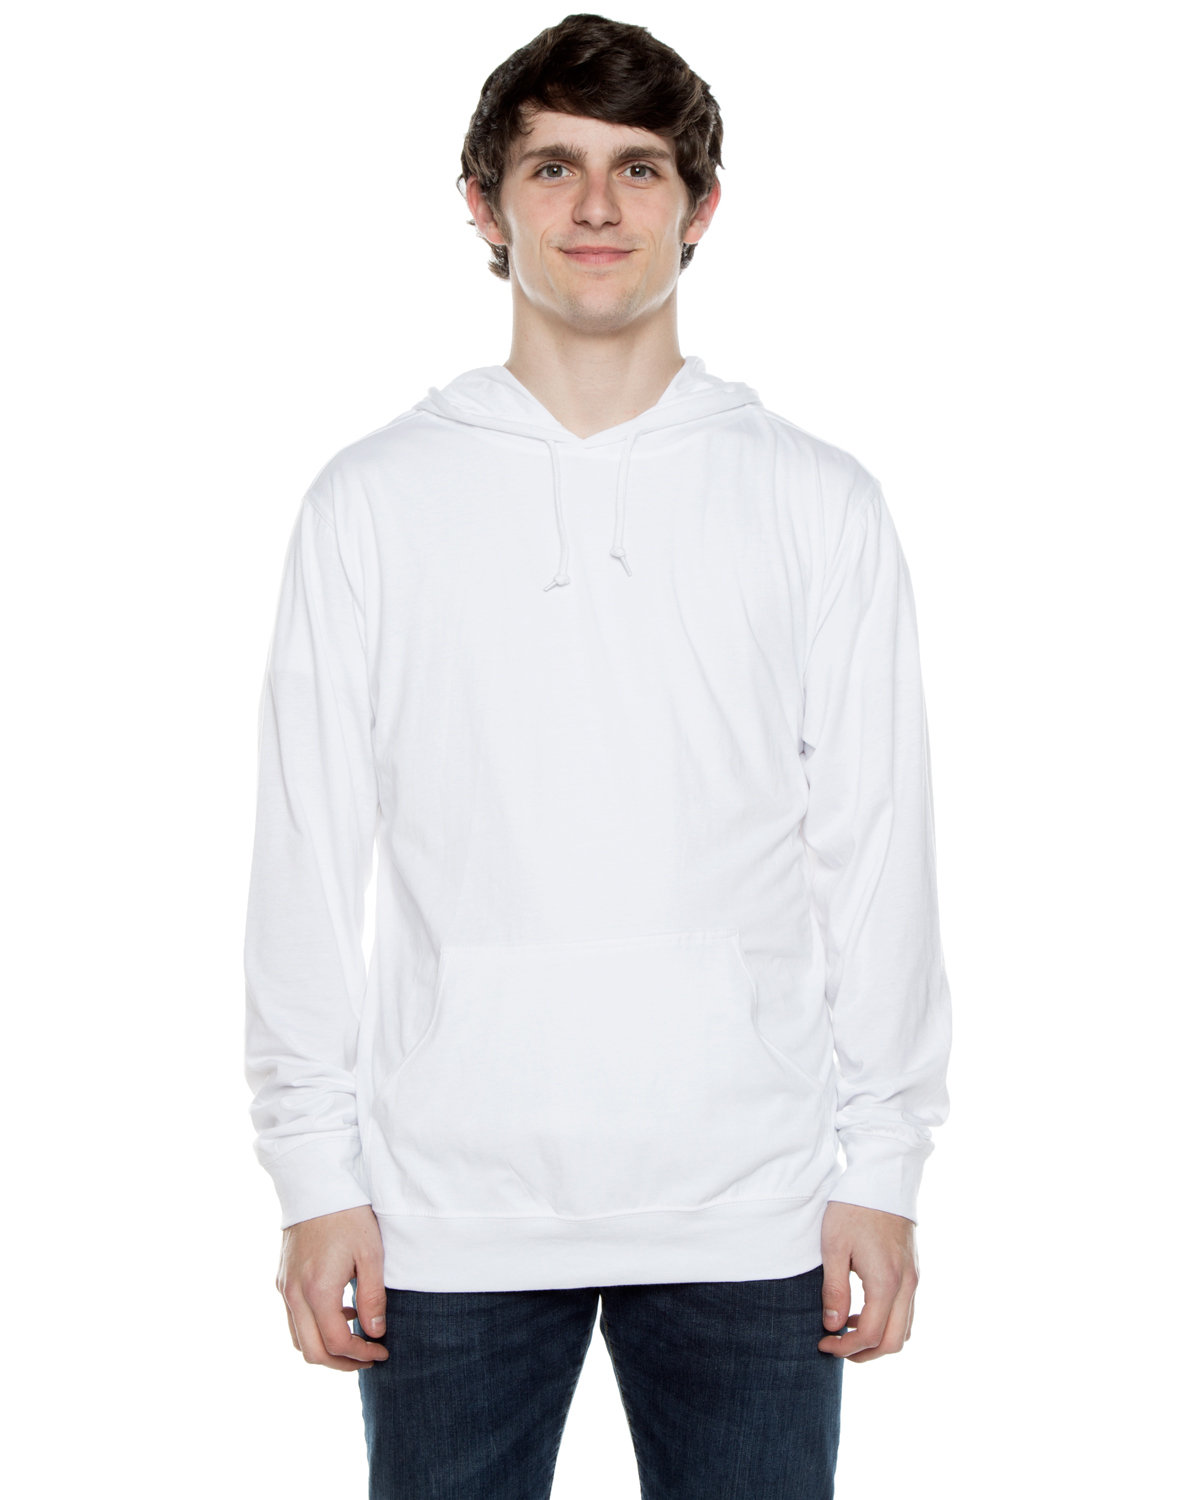 Beimar Drop Ship Unisex 4.5 oz. Long-Sleeve Jersey Hooded T-Shirt WHITE 